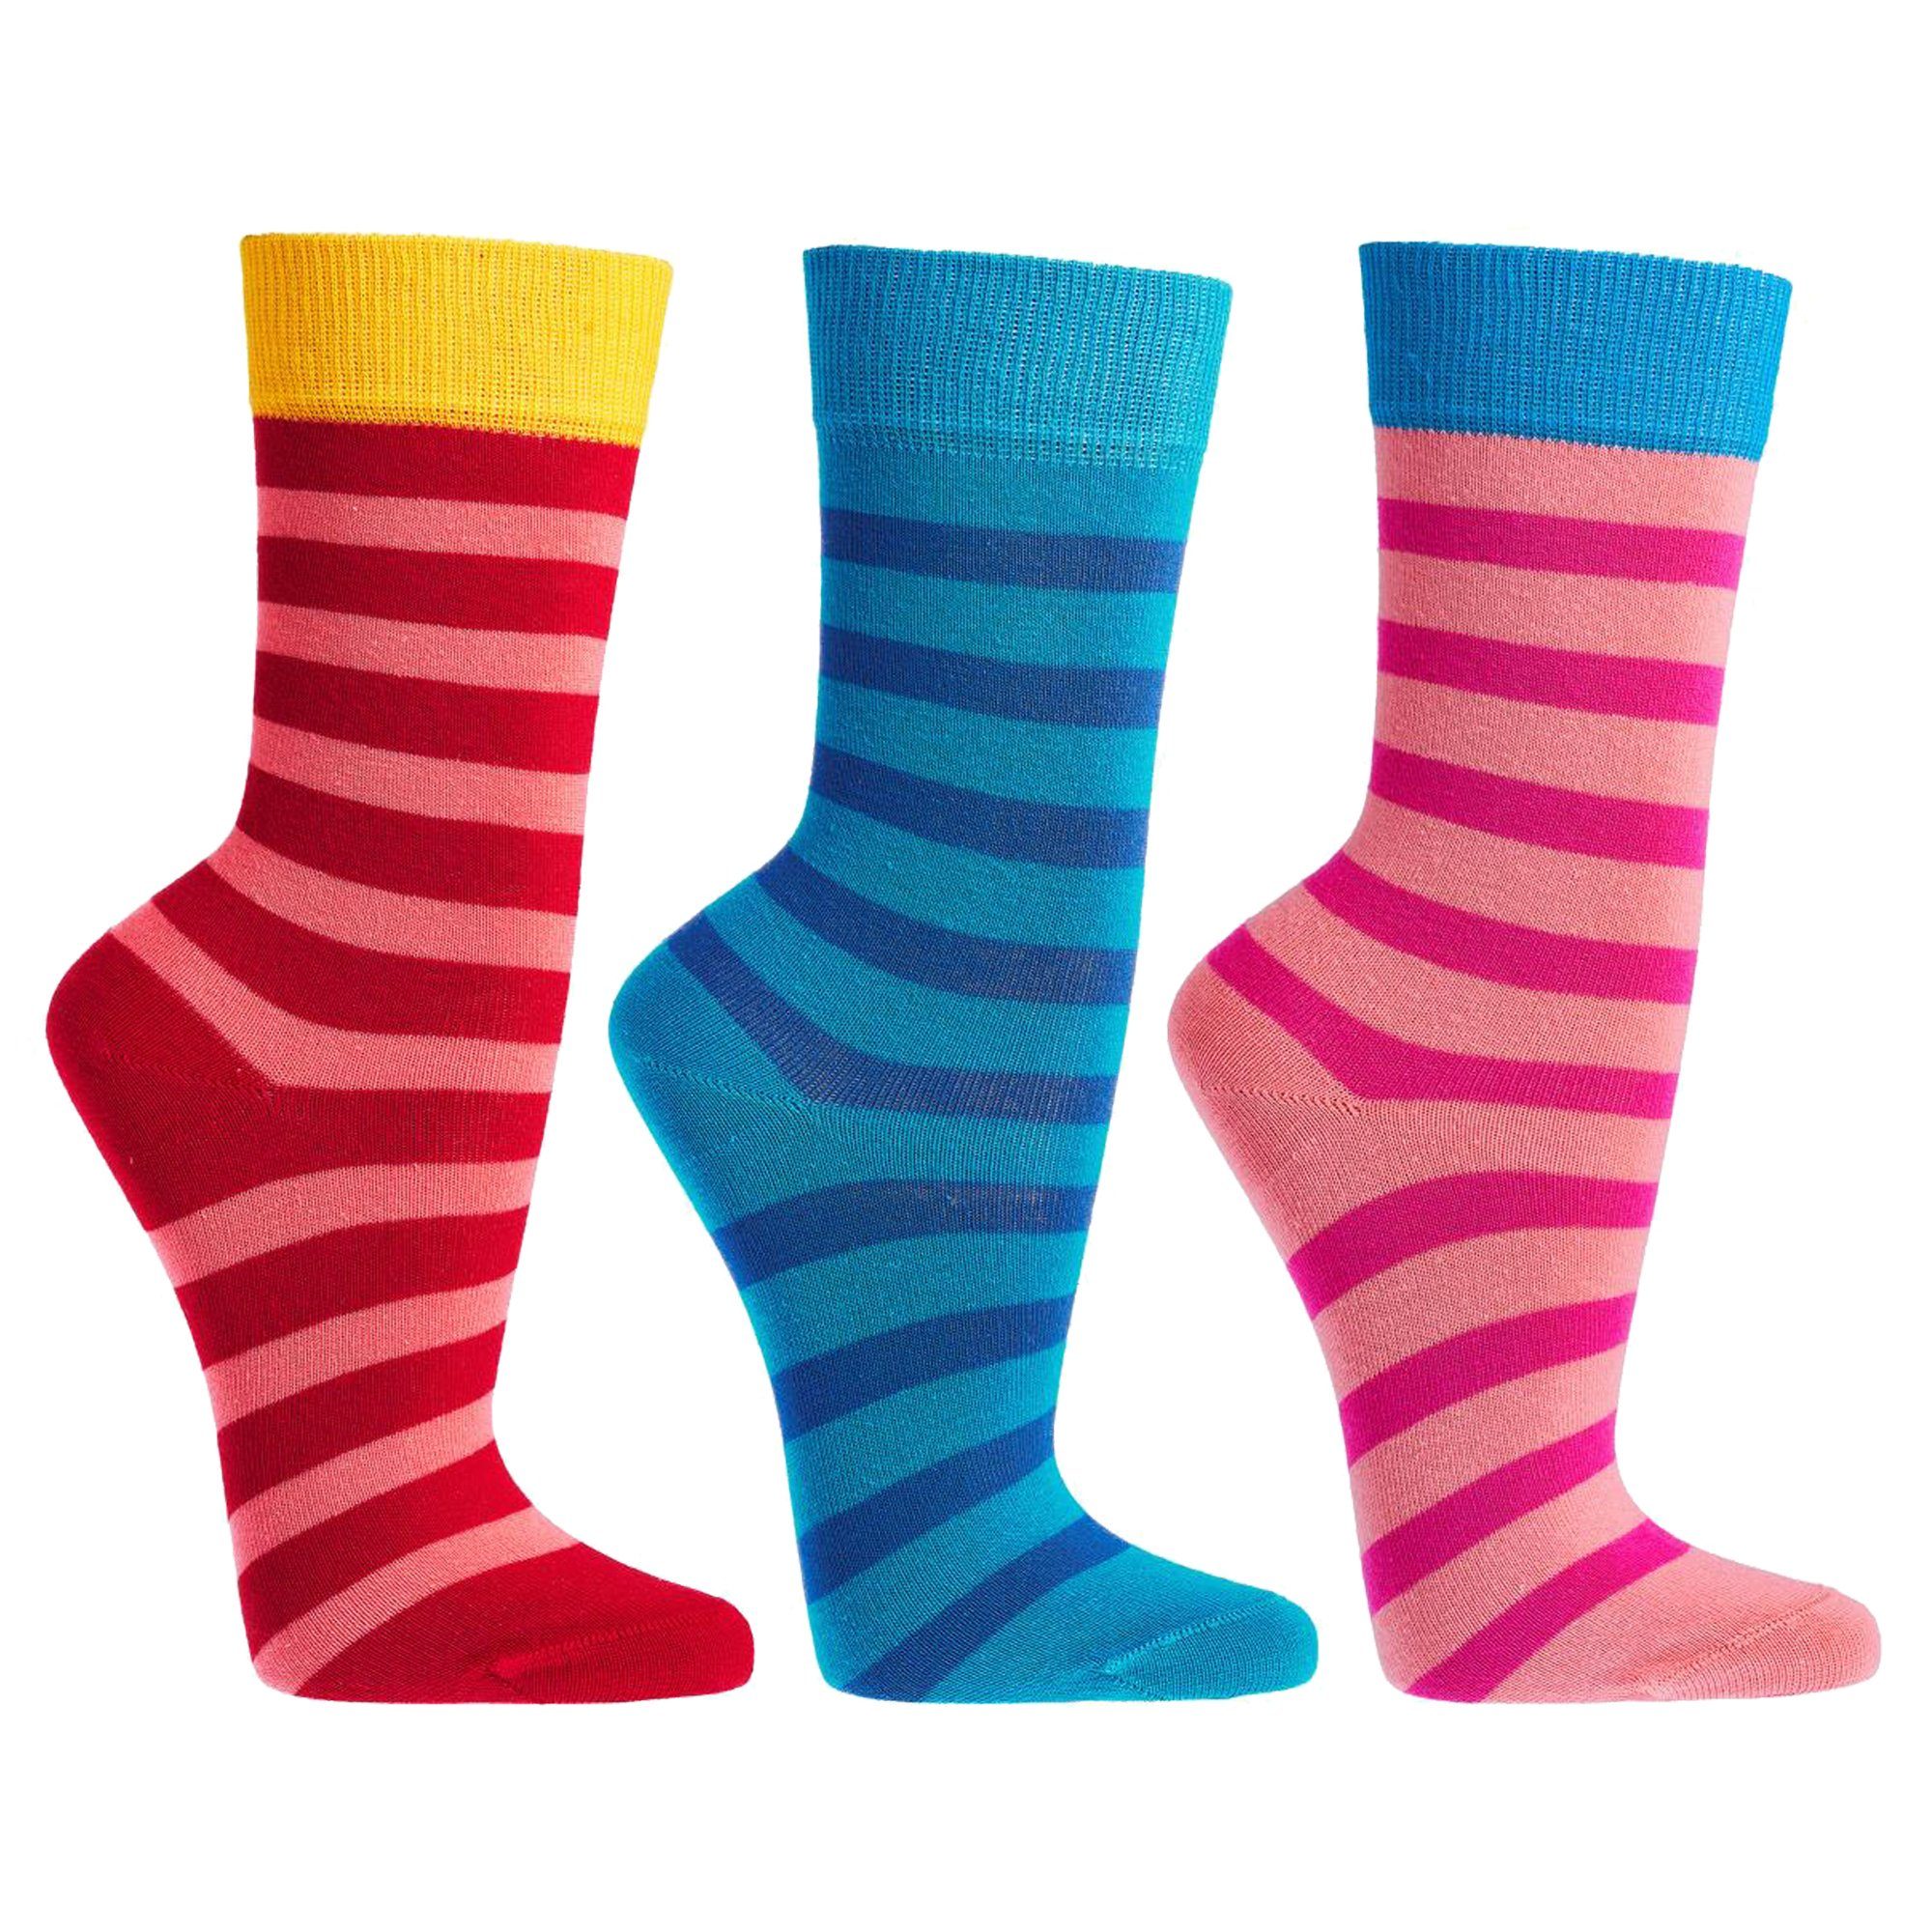 Jungen & Socks Socken rose+blau+rot Bio-Baumwolle, (Packung, Fun 3694 Kinder Paar) mit 4 Langsocken 6-Paar, Mädchen, 6 Kindersocken